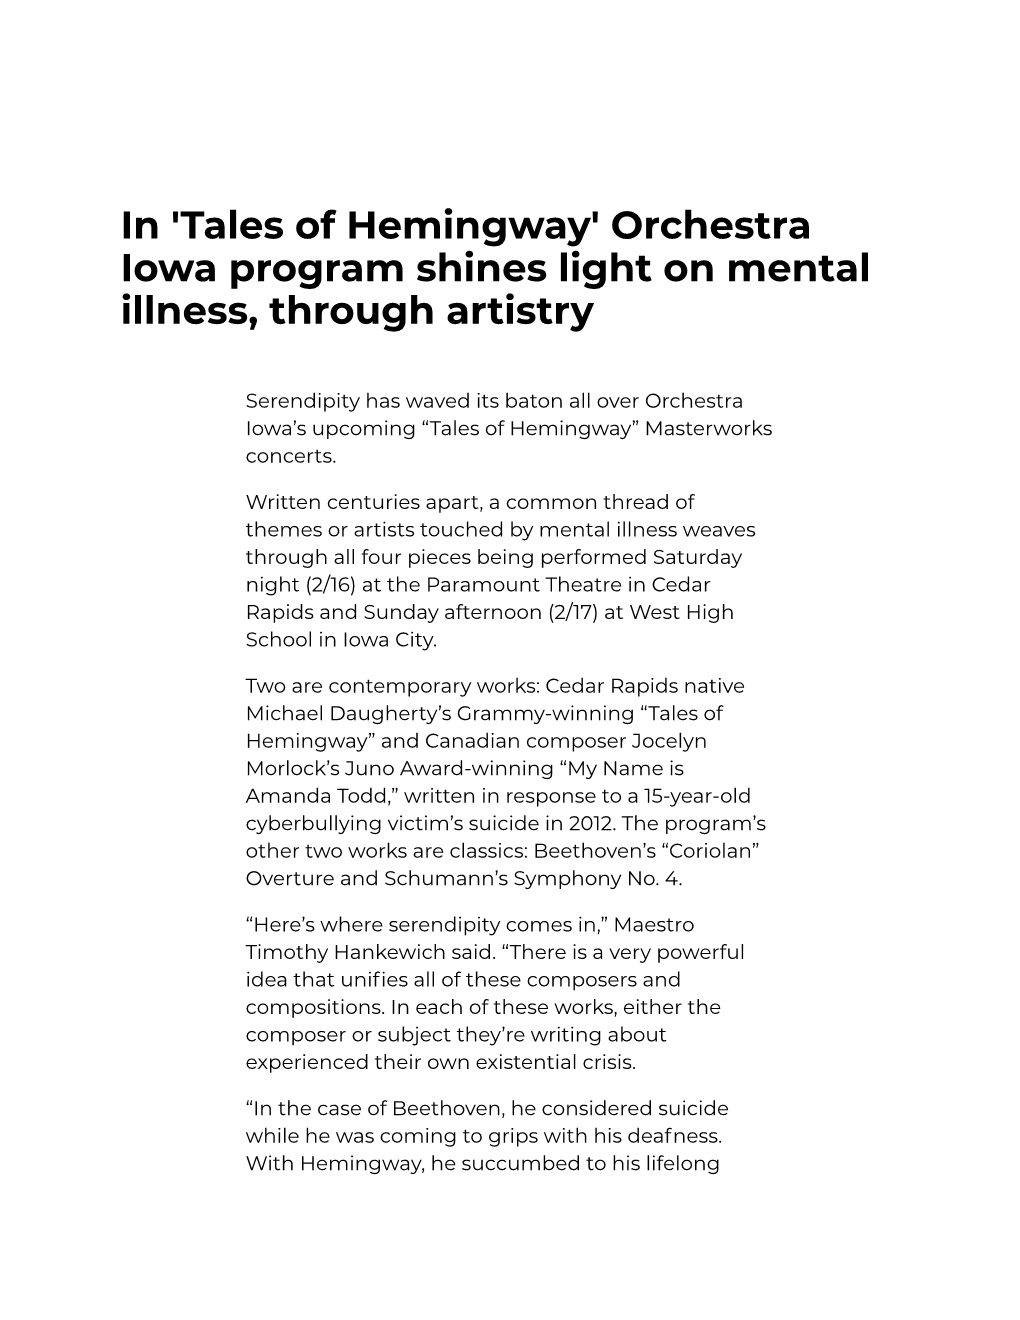 'Tales of Hemingway' Orchestra Iowa Program Shines Light on Mental Illness, Through Artistry